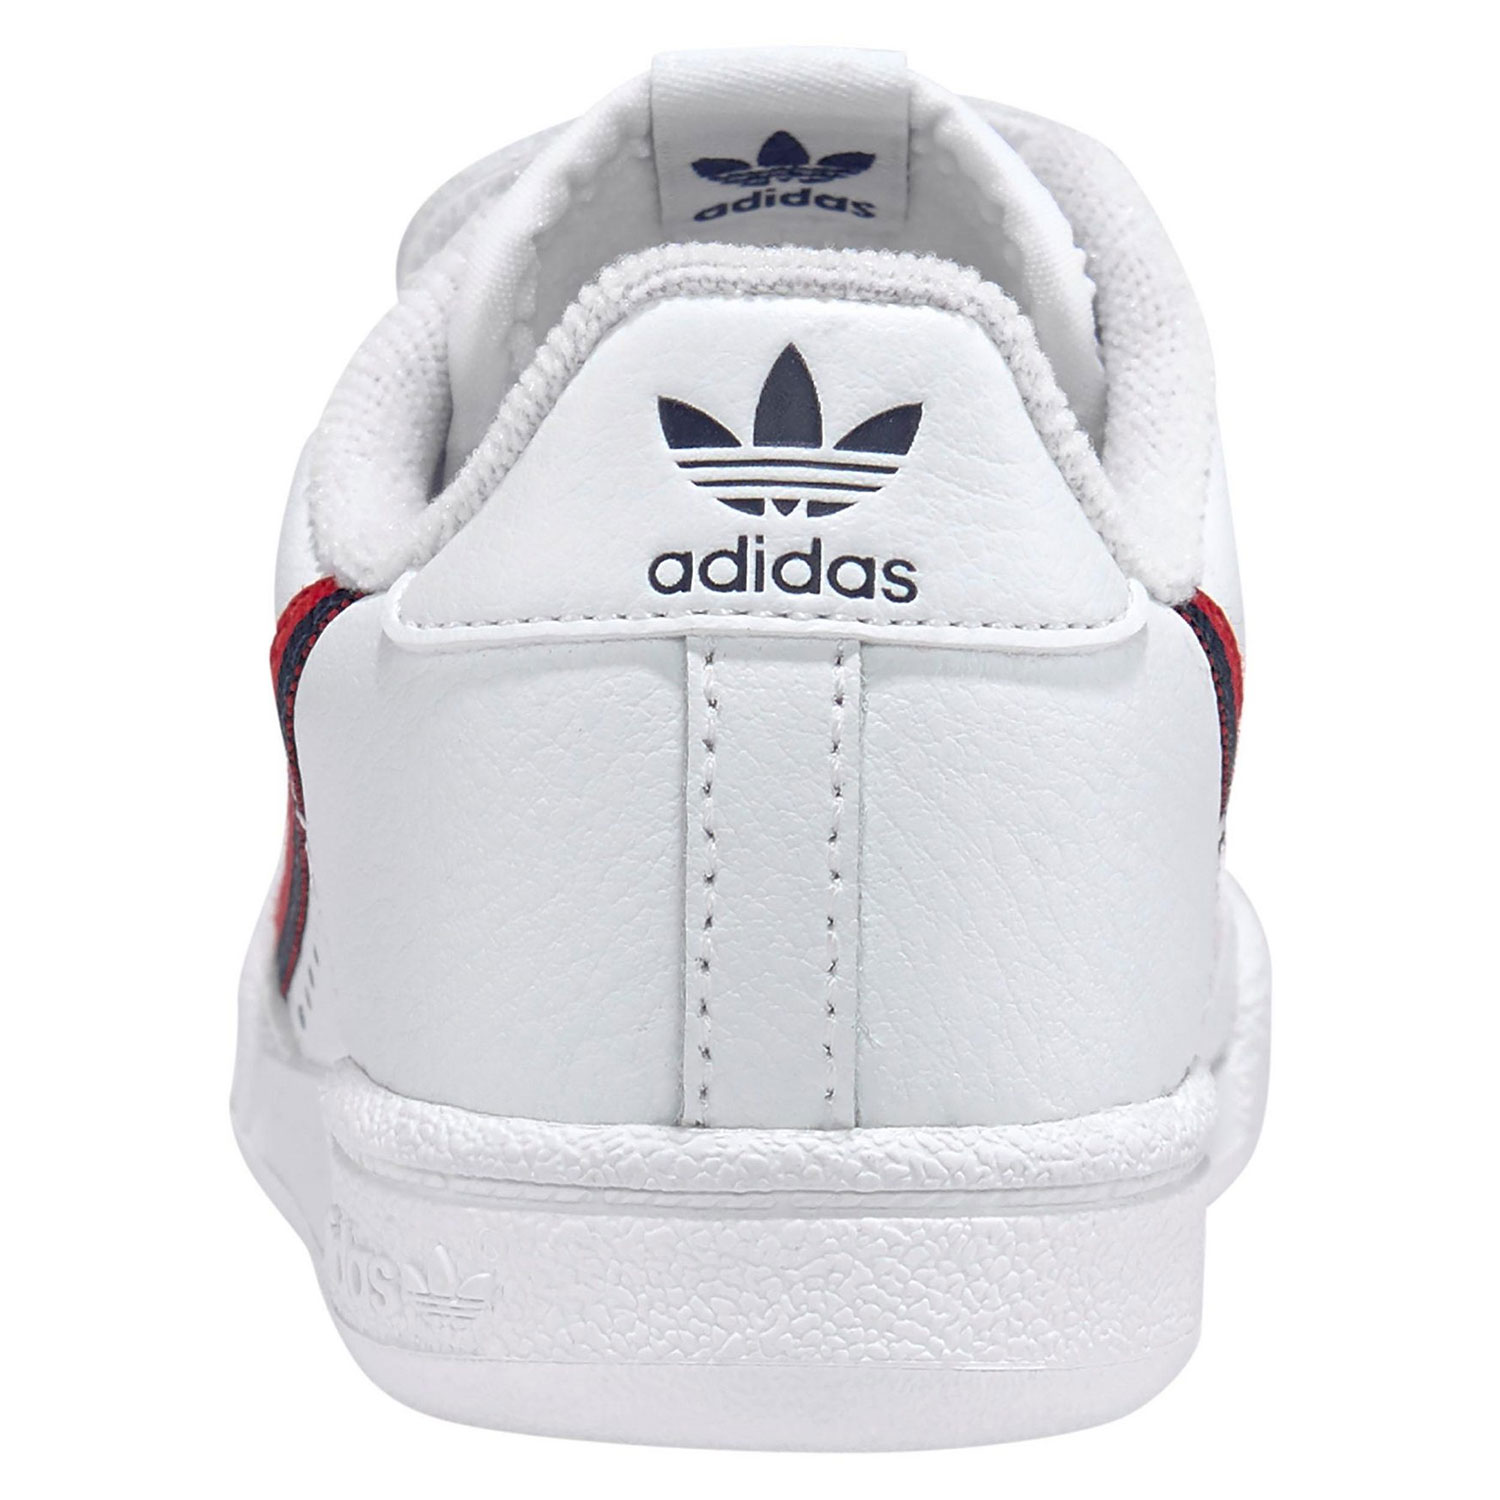 adidas Originals Continental 80 CF C Kinder Sneaker weiß